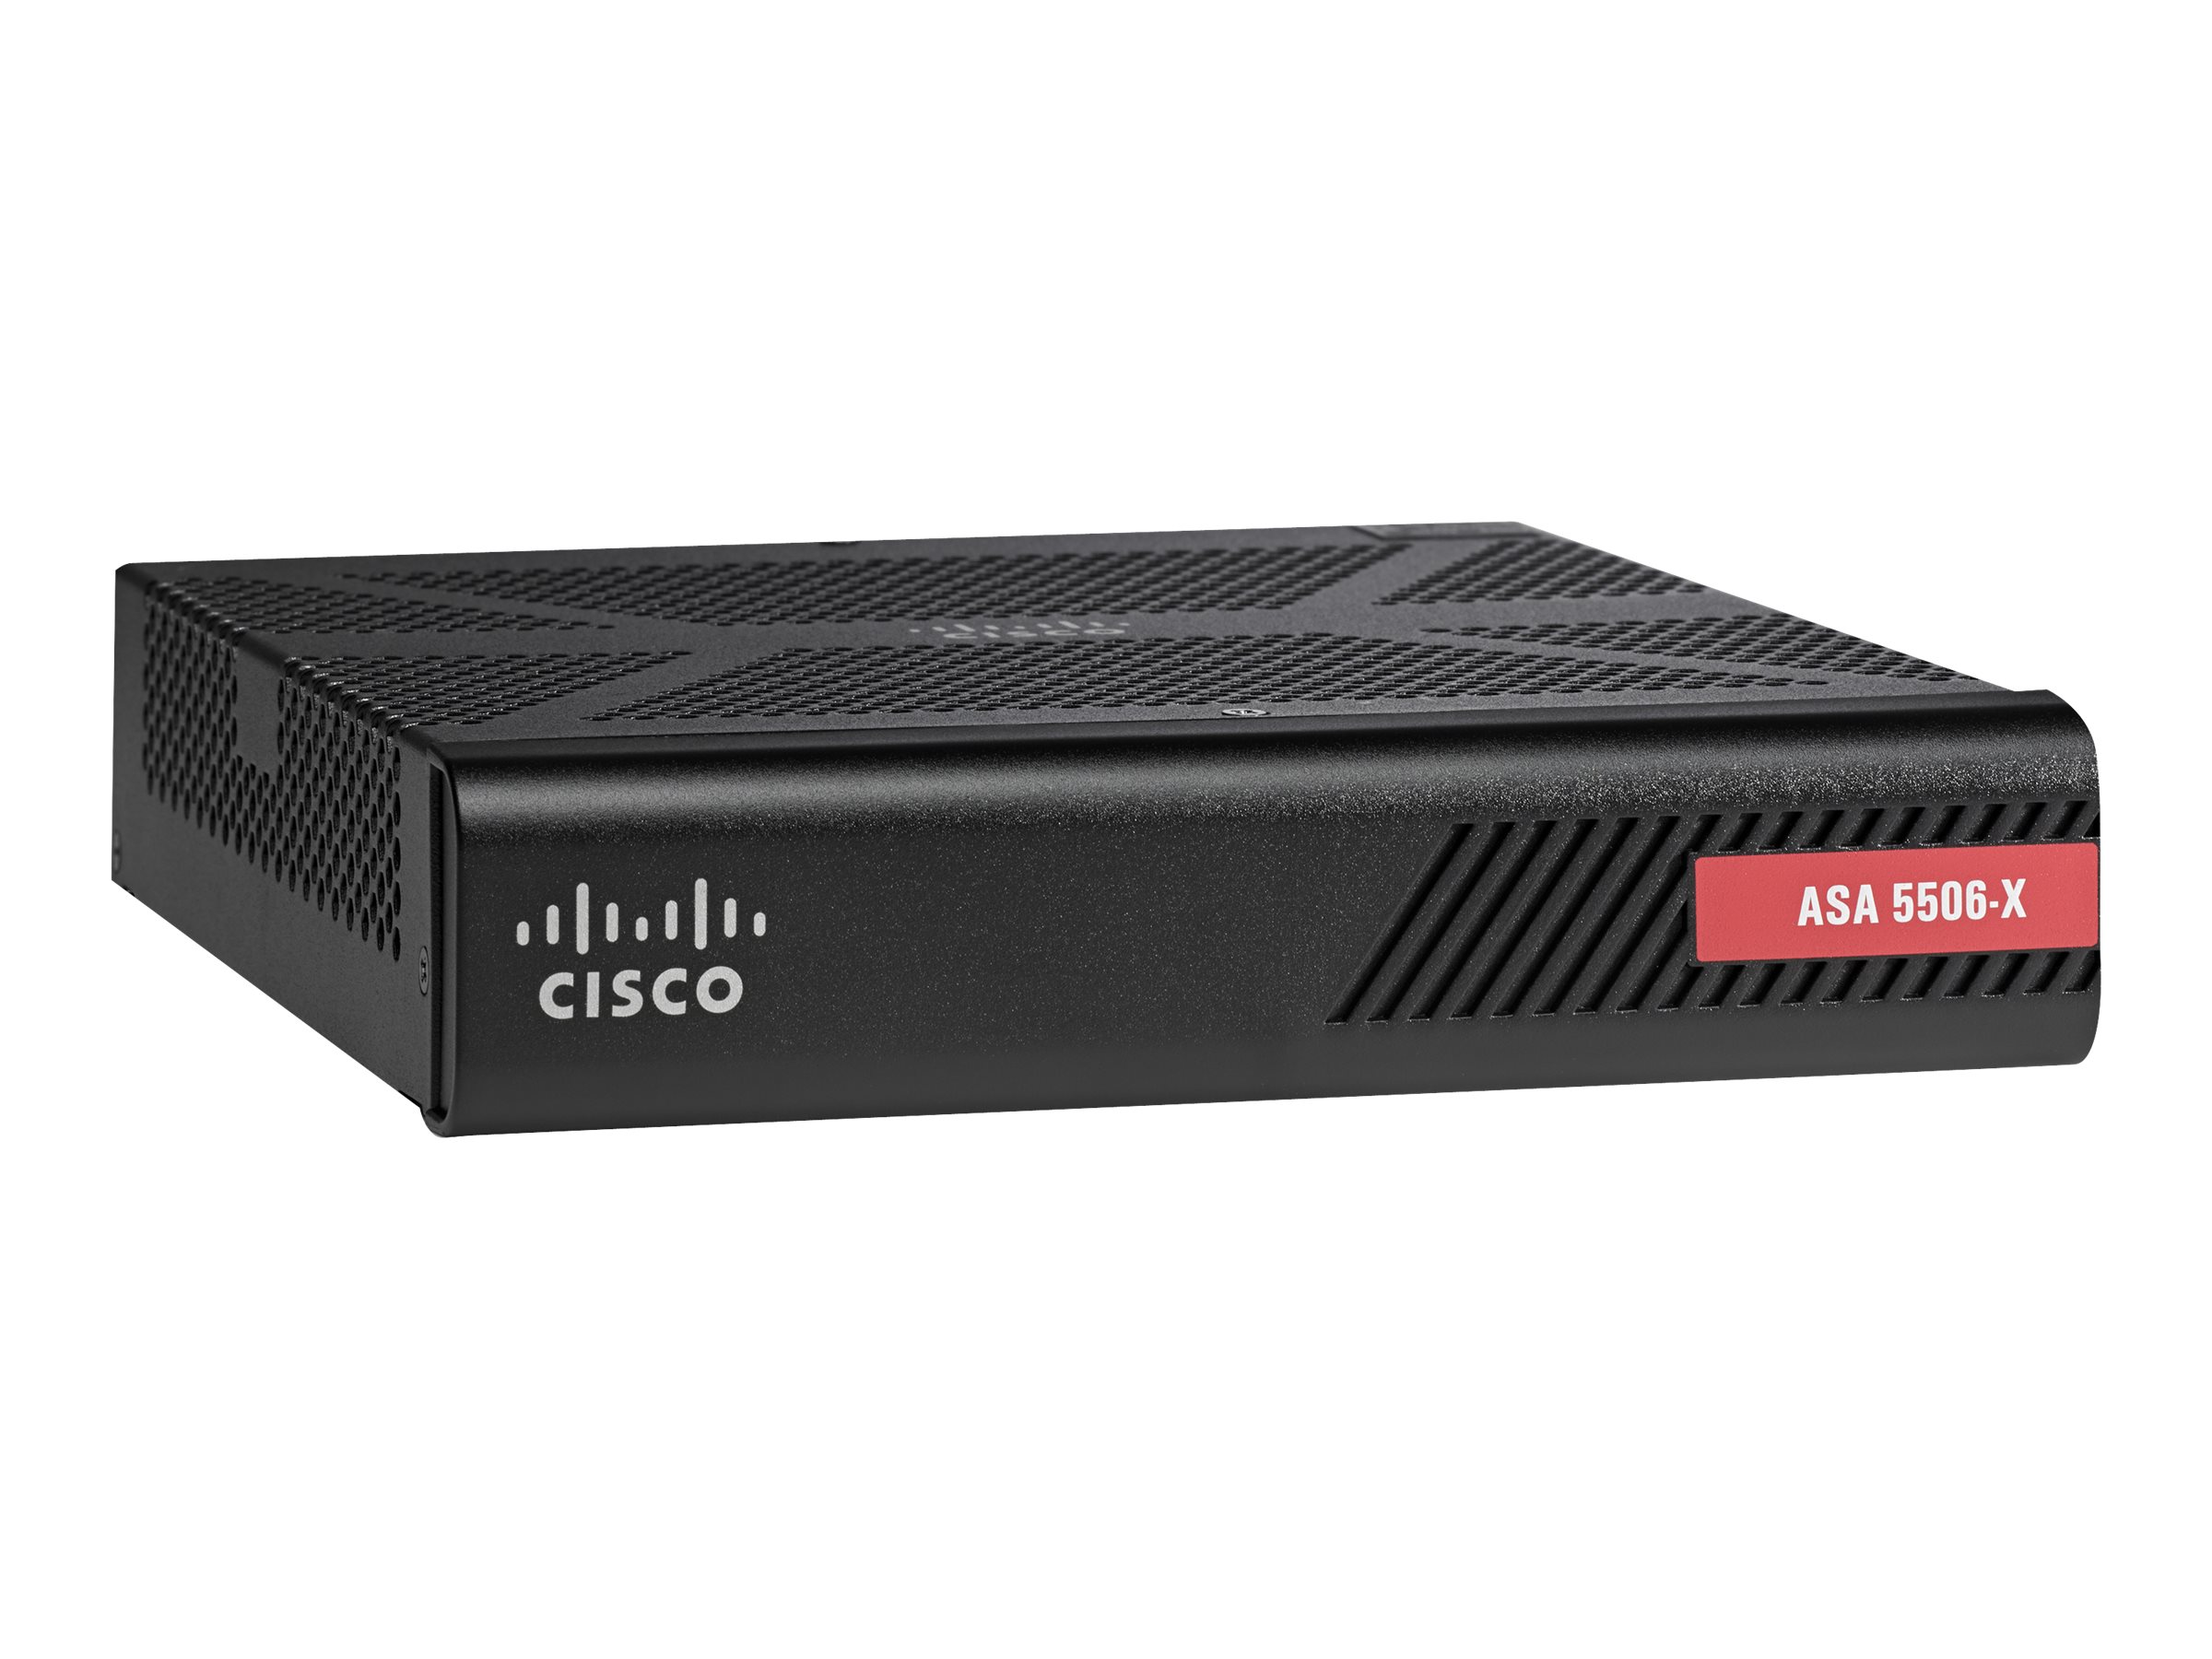 Cisco ASA 5506-X with FirePOWER Services - Sicherheitsgerät